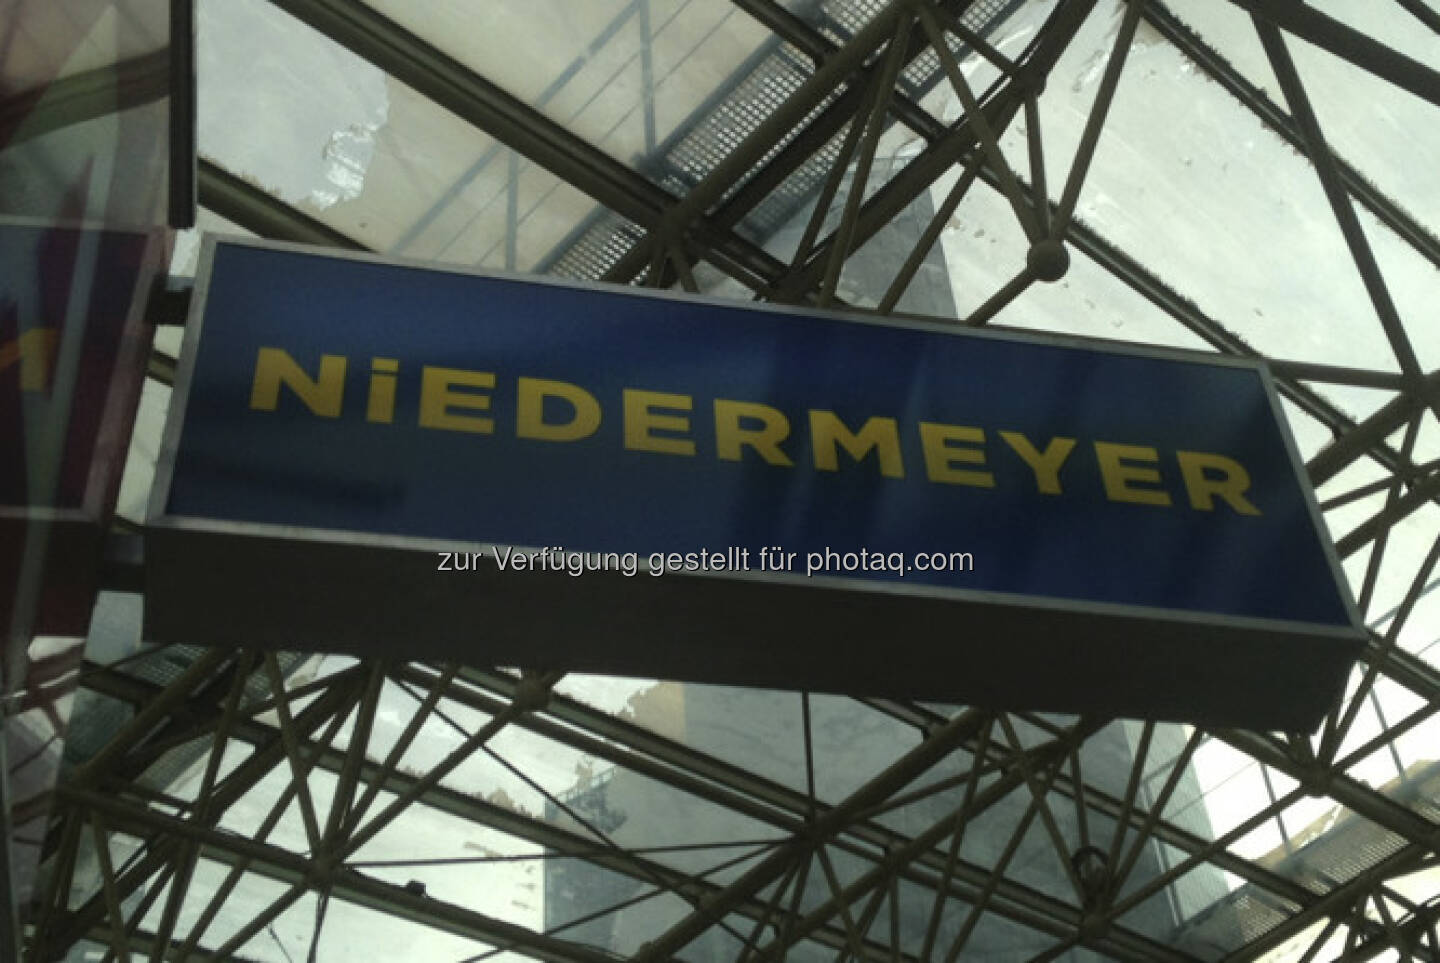 Niedermeyer